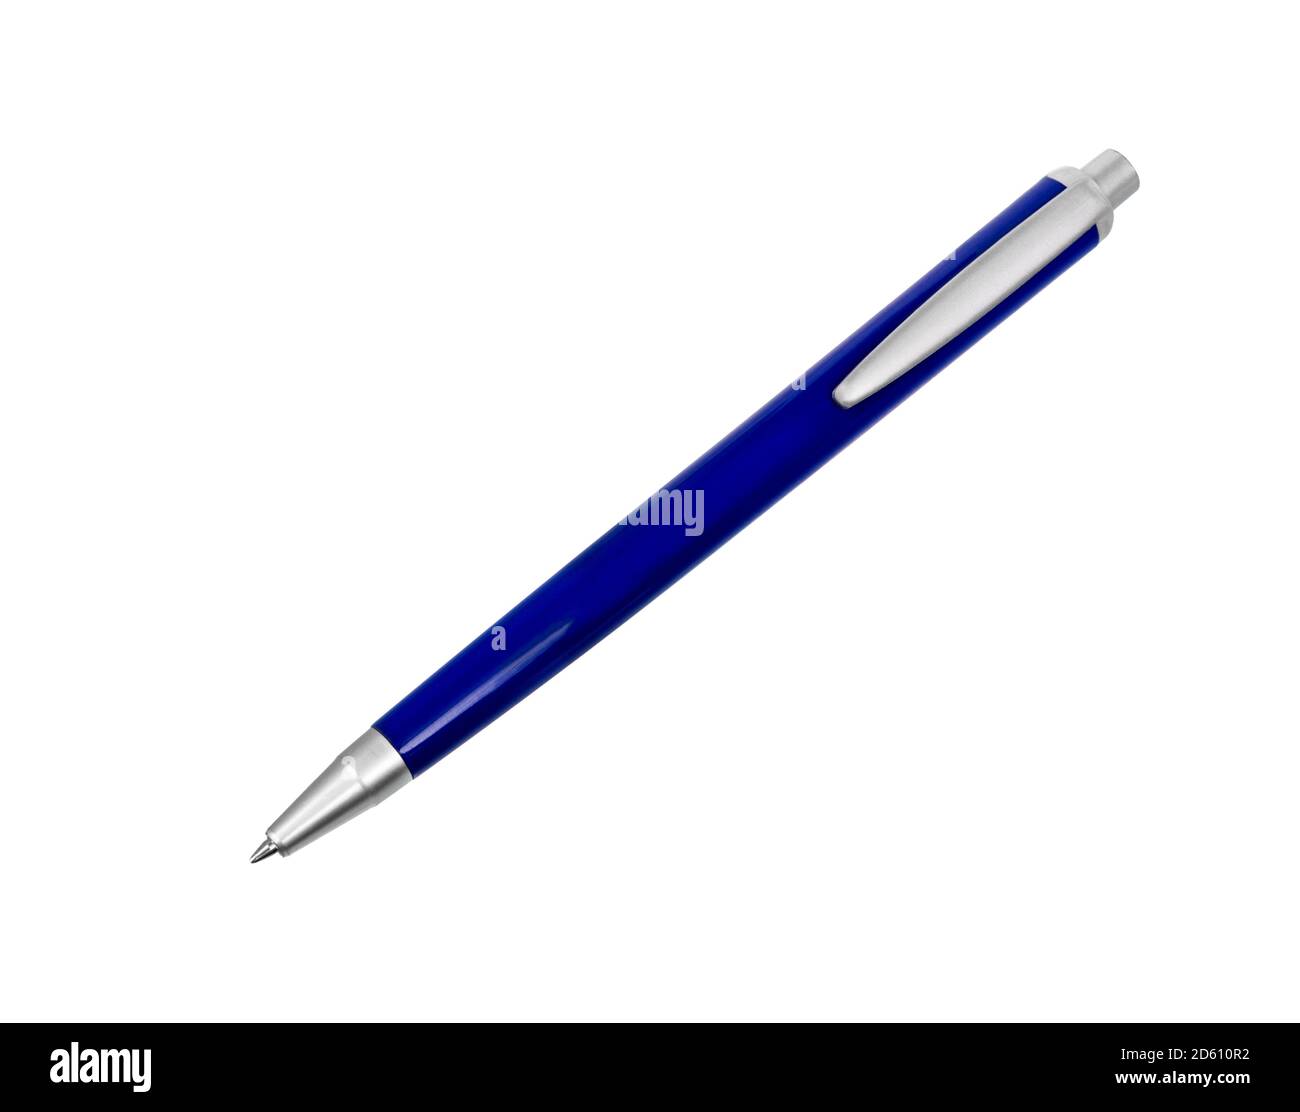 Metal pen isolated on white background. Blue ballpoint pen cut out.  Metallic disposable biro pen Stock Photo - Alamy